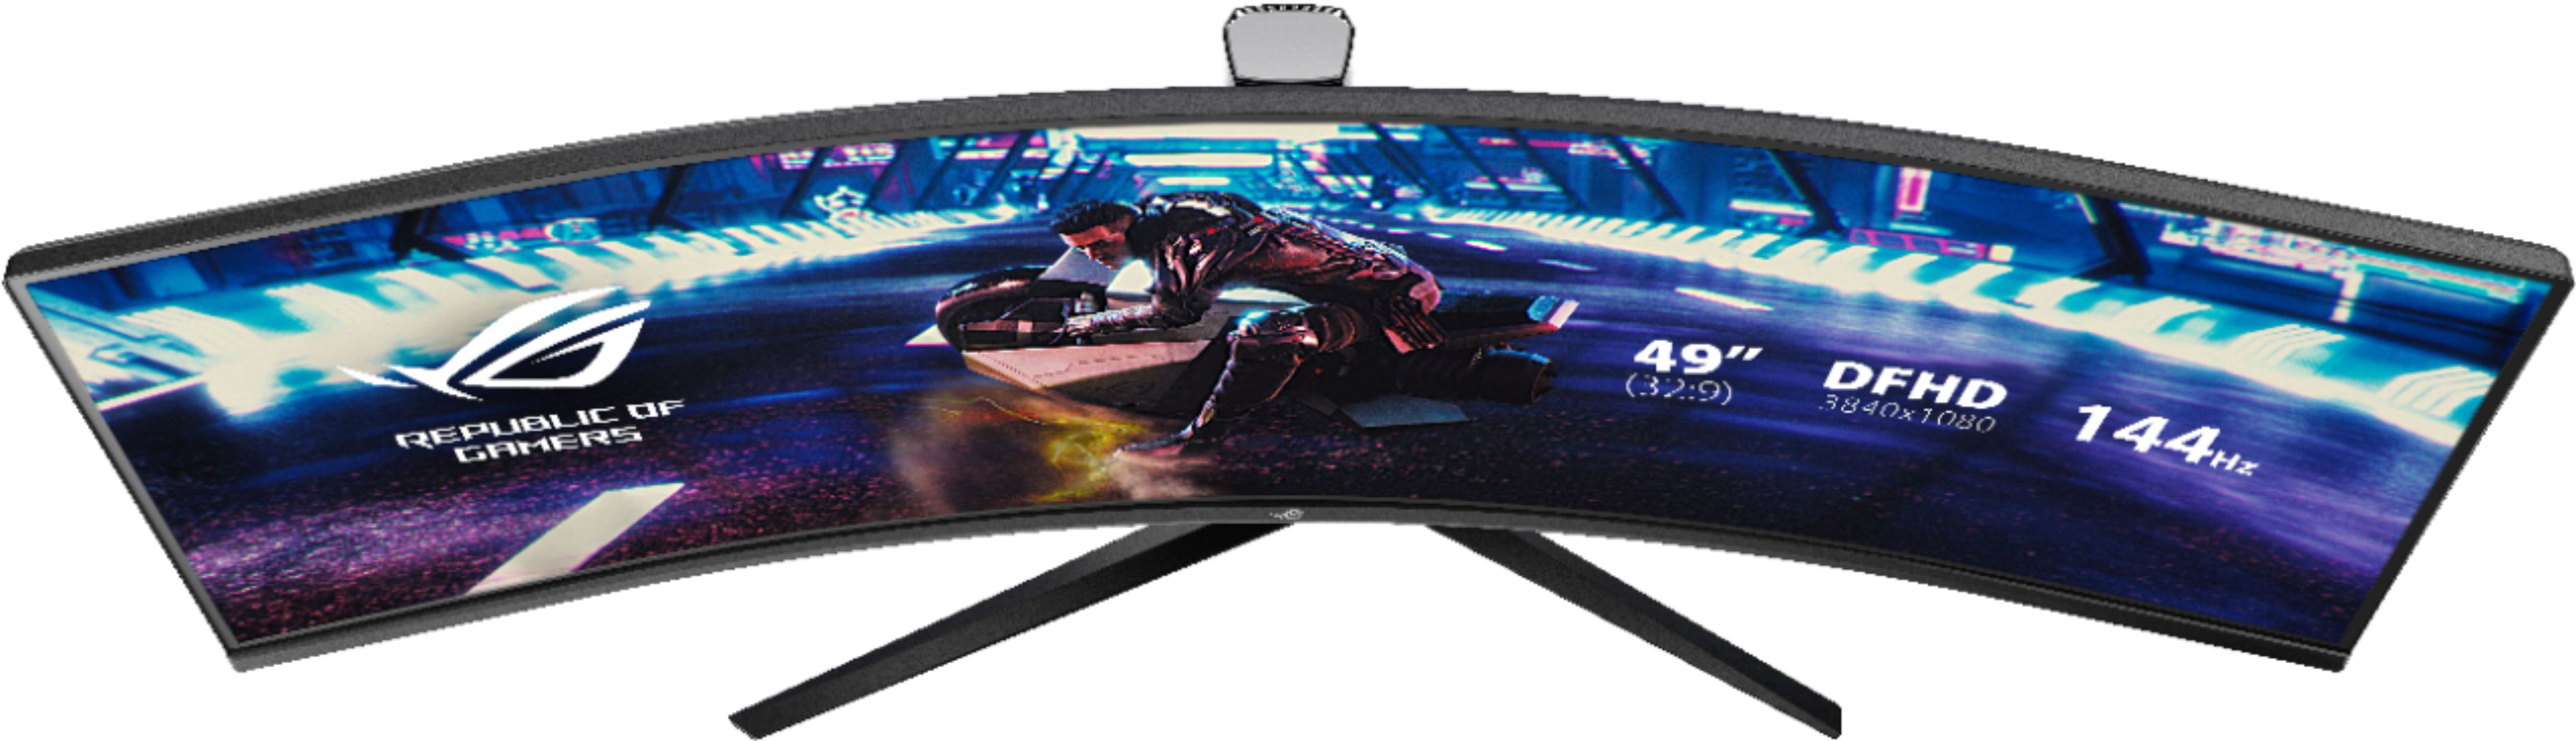 HDR FreeSync Curved ROG Black Strix XG49VQ 49” Monitor FHD ASUS with Gaming Best (DisplayPort,HDMI,USB) 144Hz Buy: